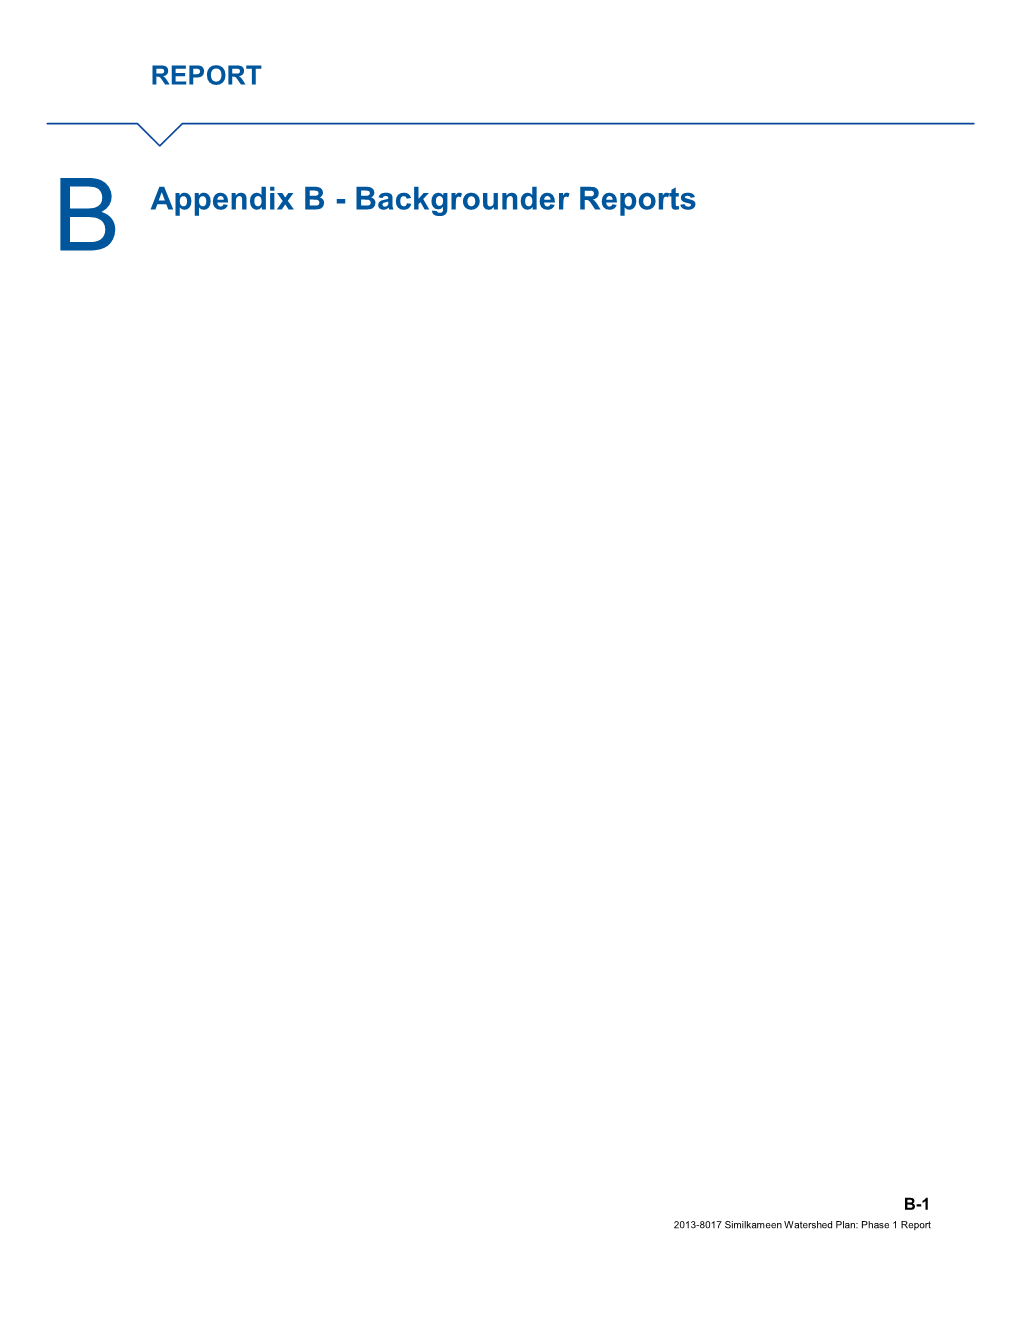 Appendix B - Backgrounder Reports